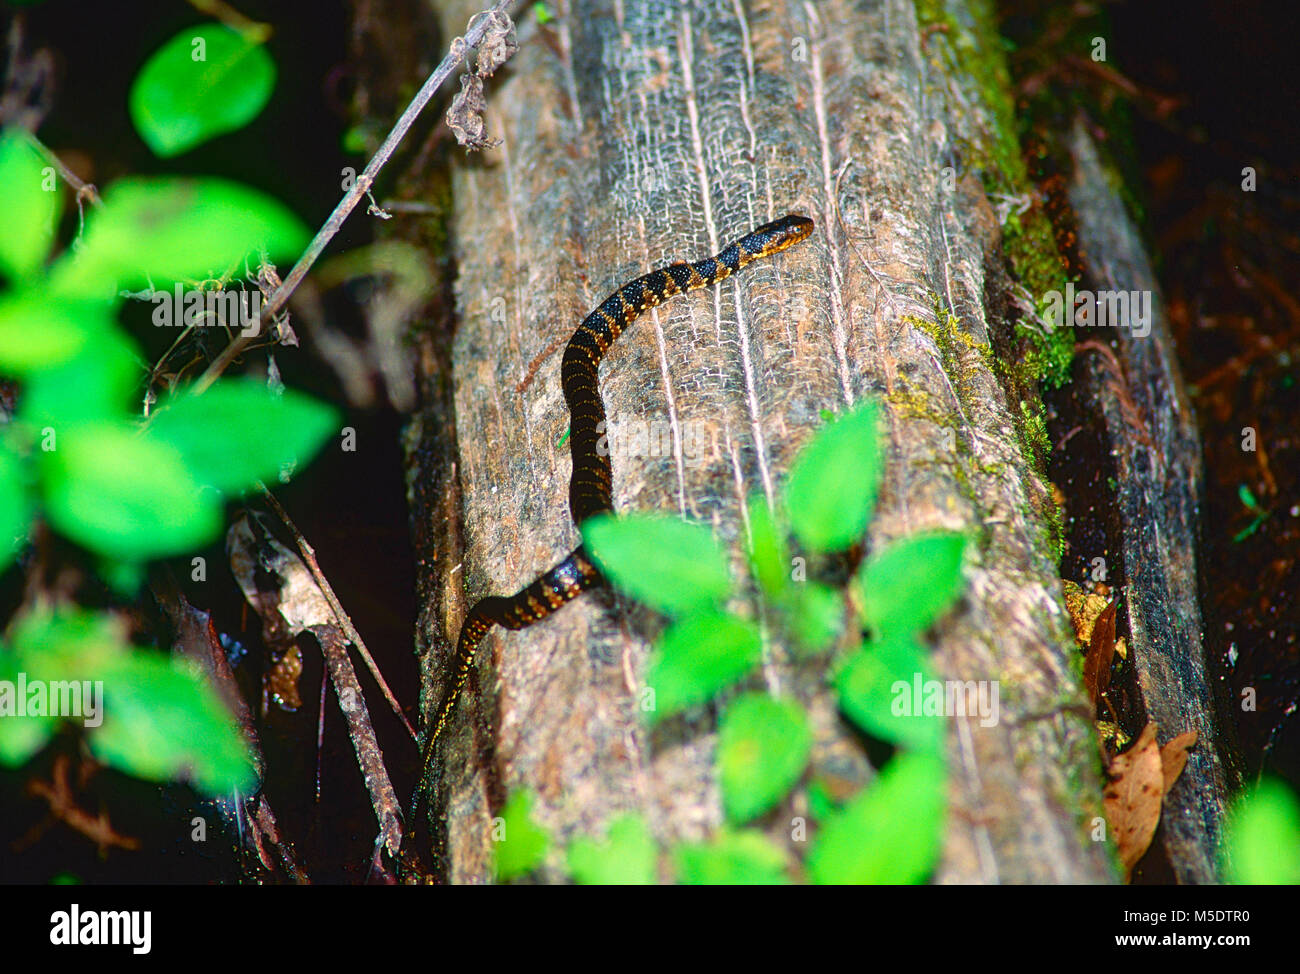 Banded Watersnake, Nerodia fasciata, Colubridae, snake, reptile, animal, Everglades National Park  Florida, USA Stock Photo